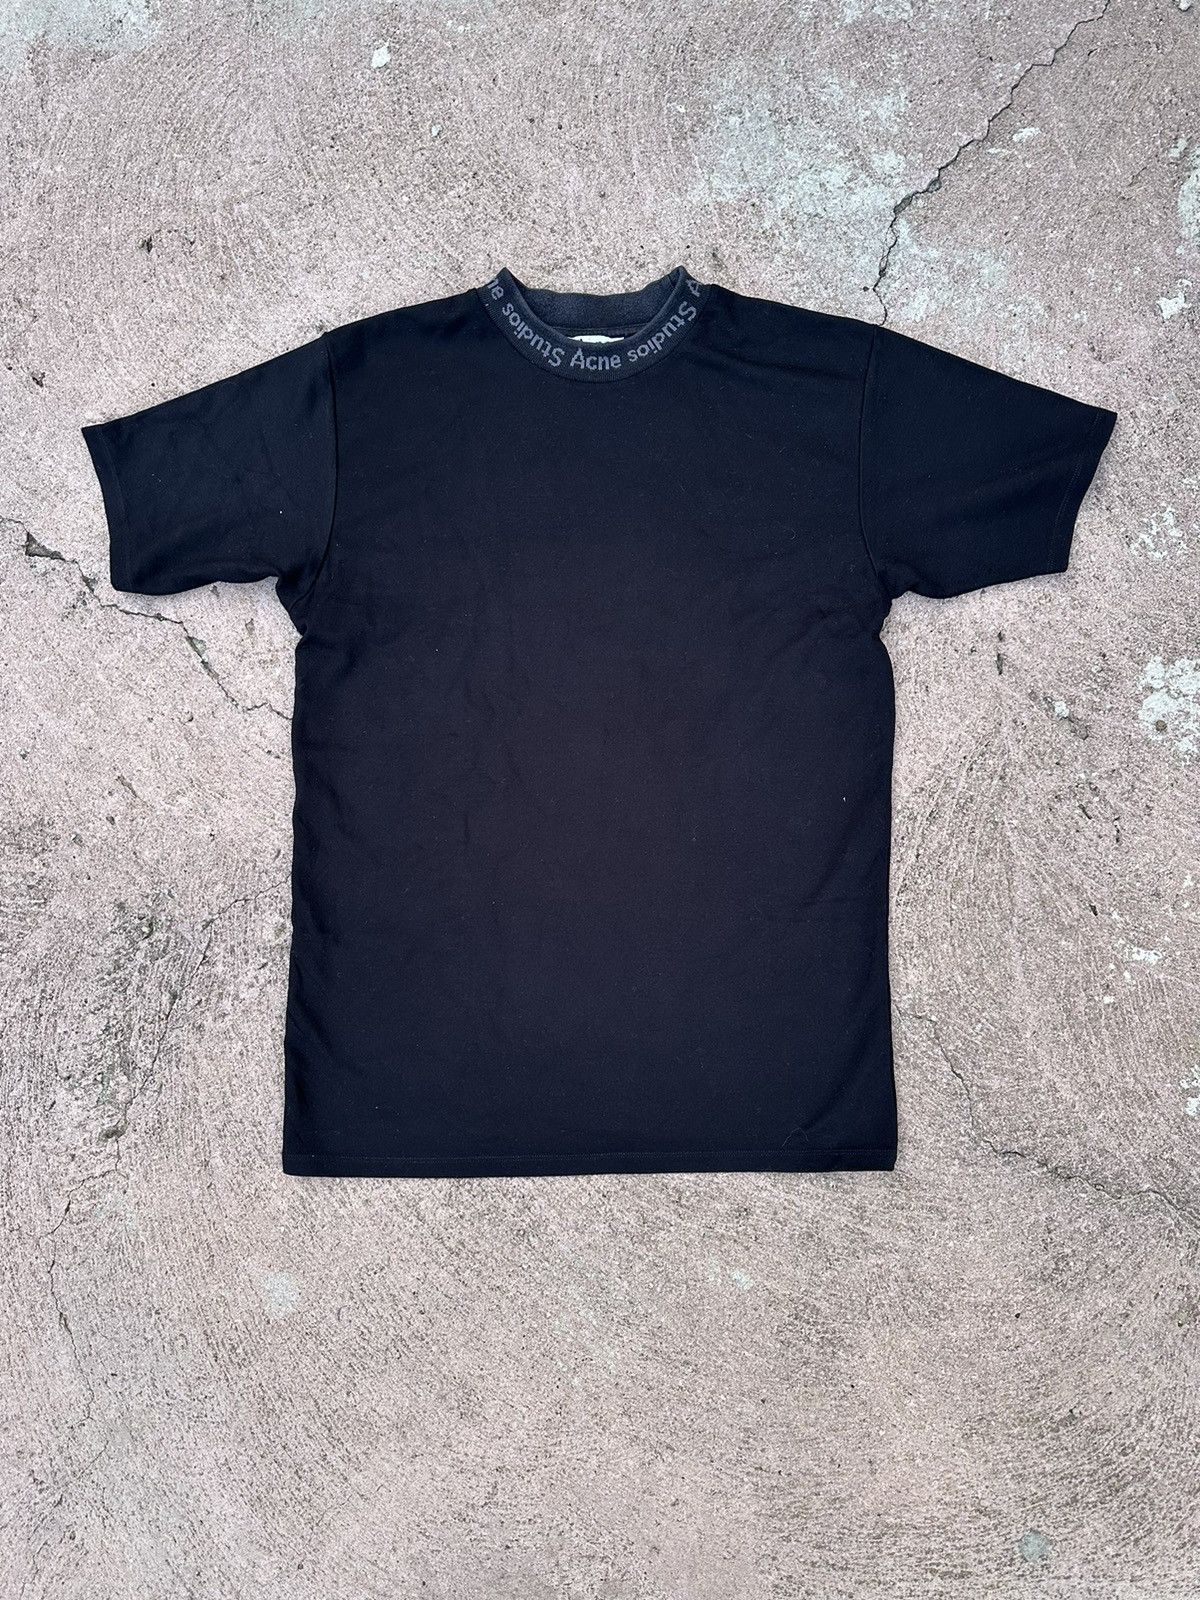 Acne Studios Acne Studios Black Ribbed Logo T Shirt Tee Rare | Grailed